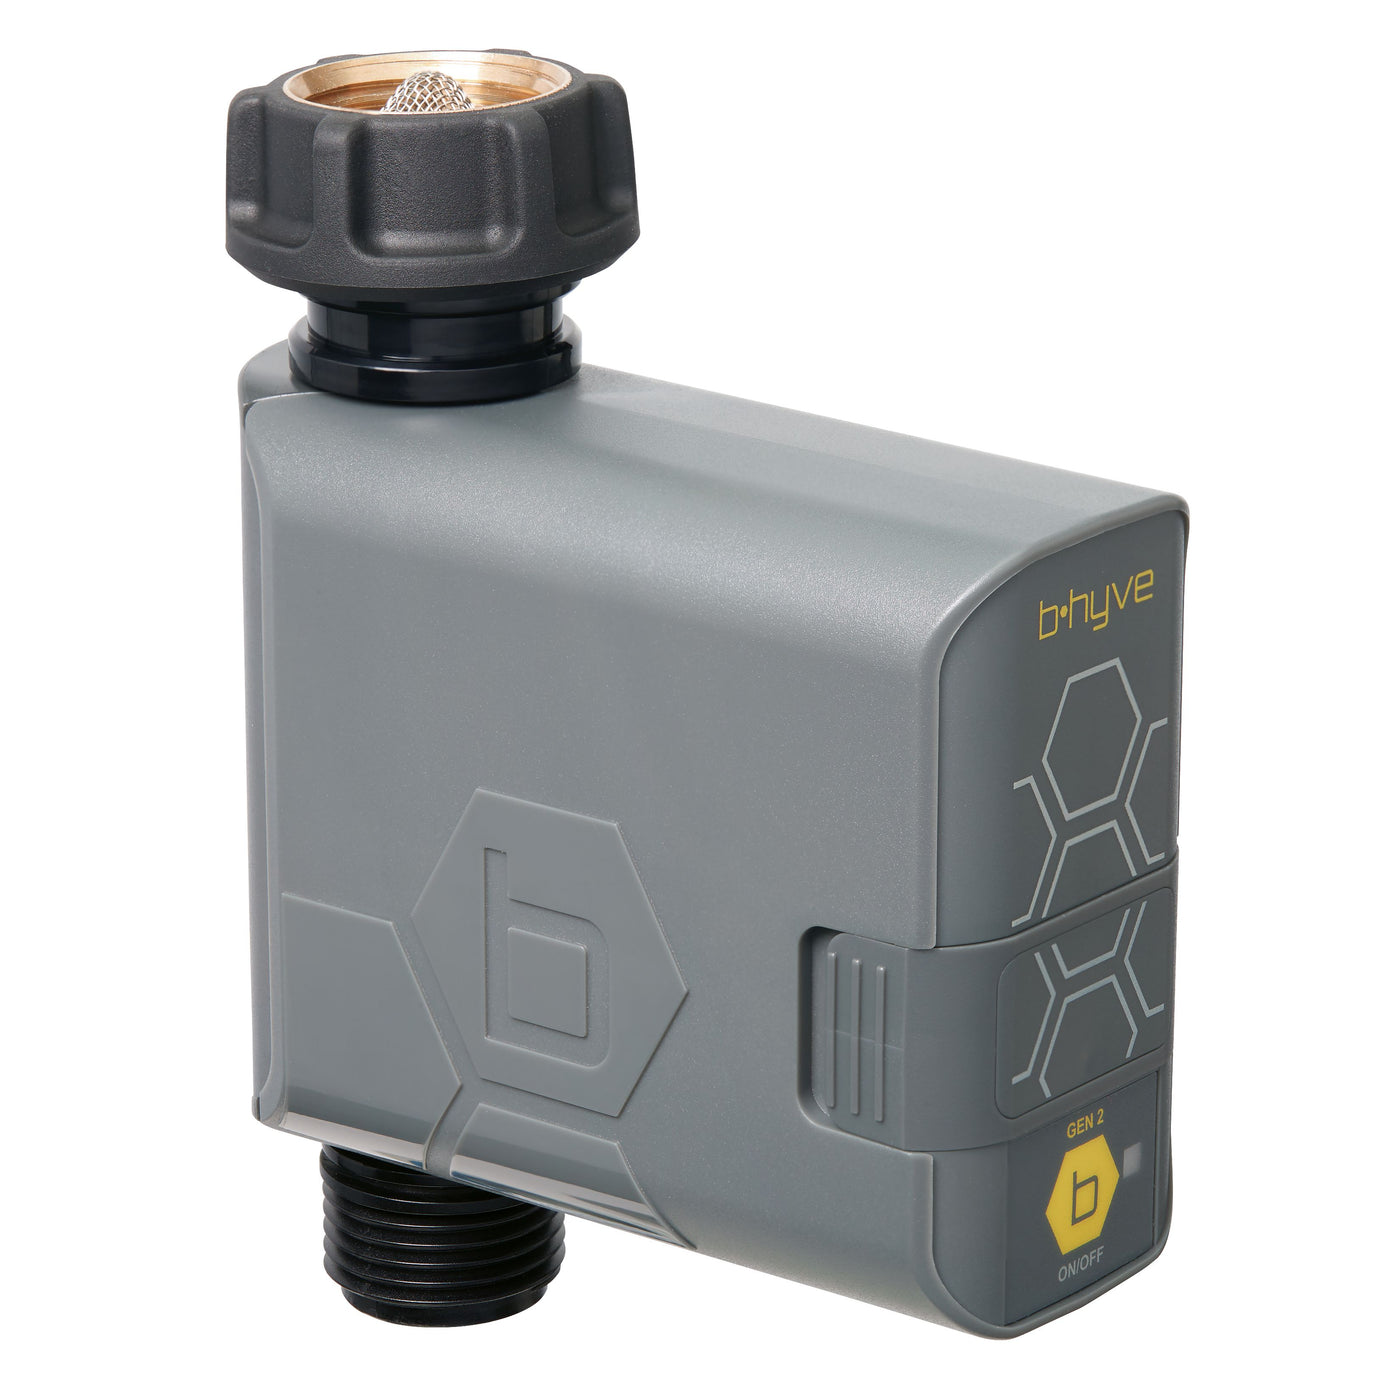 Gen 2 B-hyve smart hose watering timer.